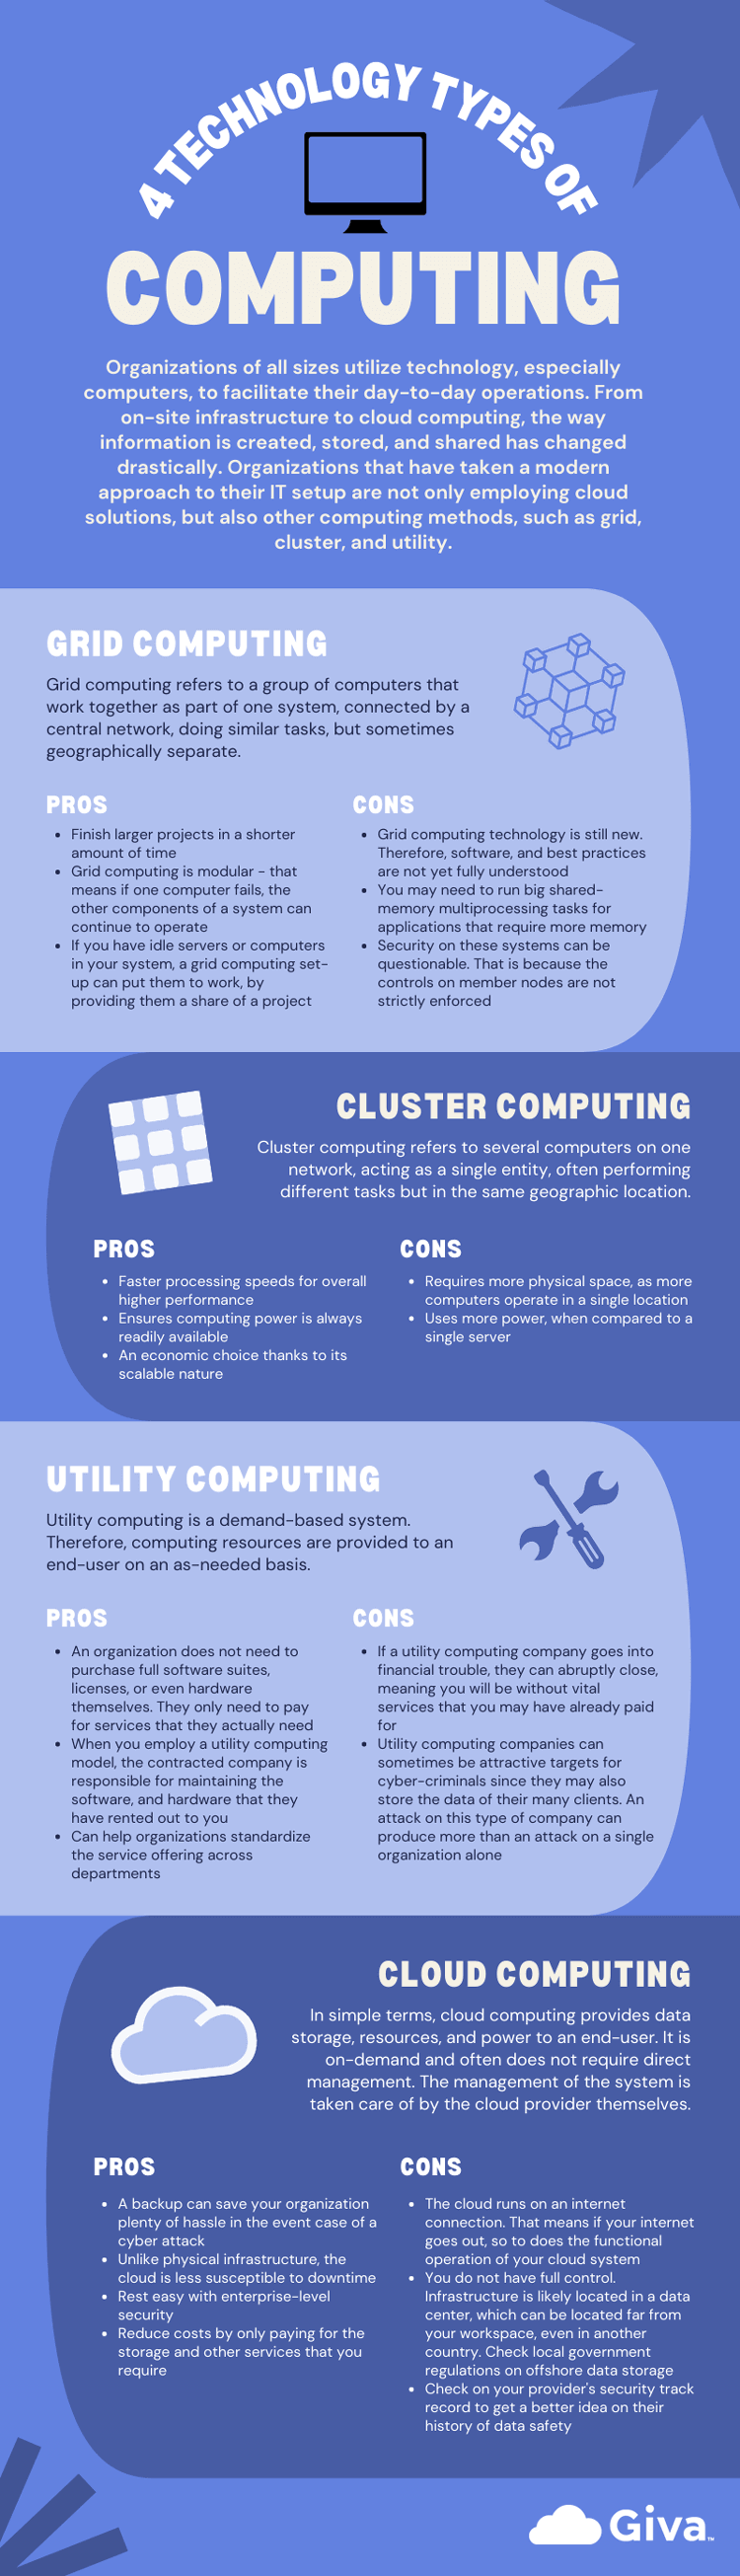 what companies use grid computing